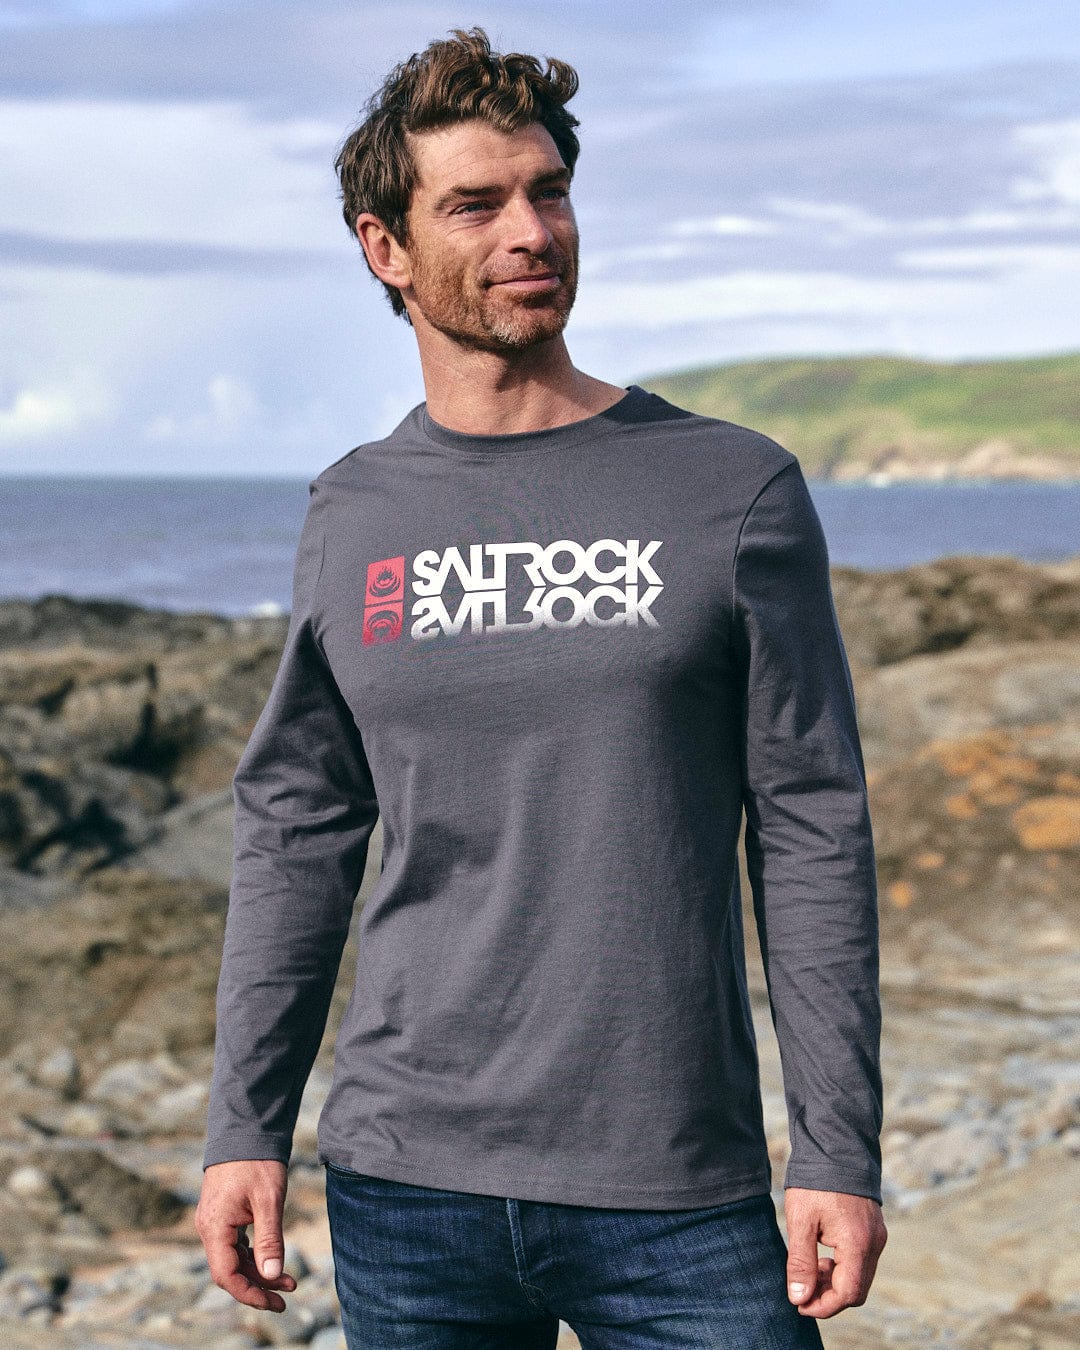 A man wearing a Reflect - Mens Long Sleeve T-Shirt - Grey with Saltrock branding.